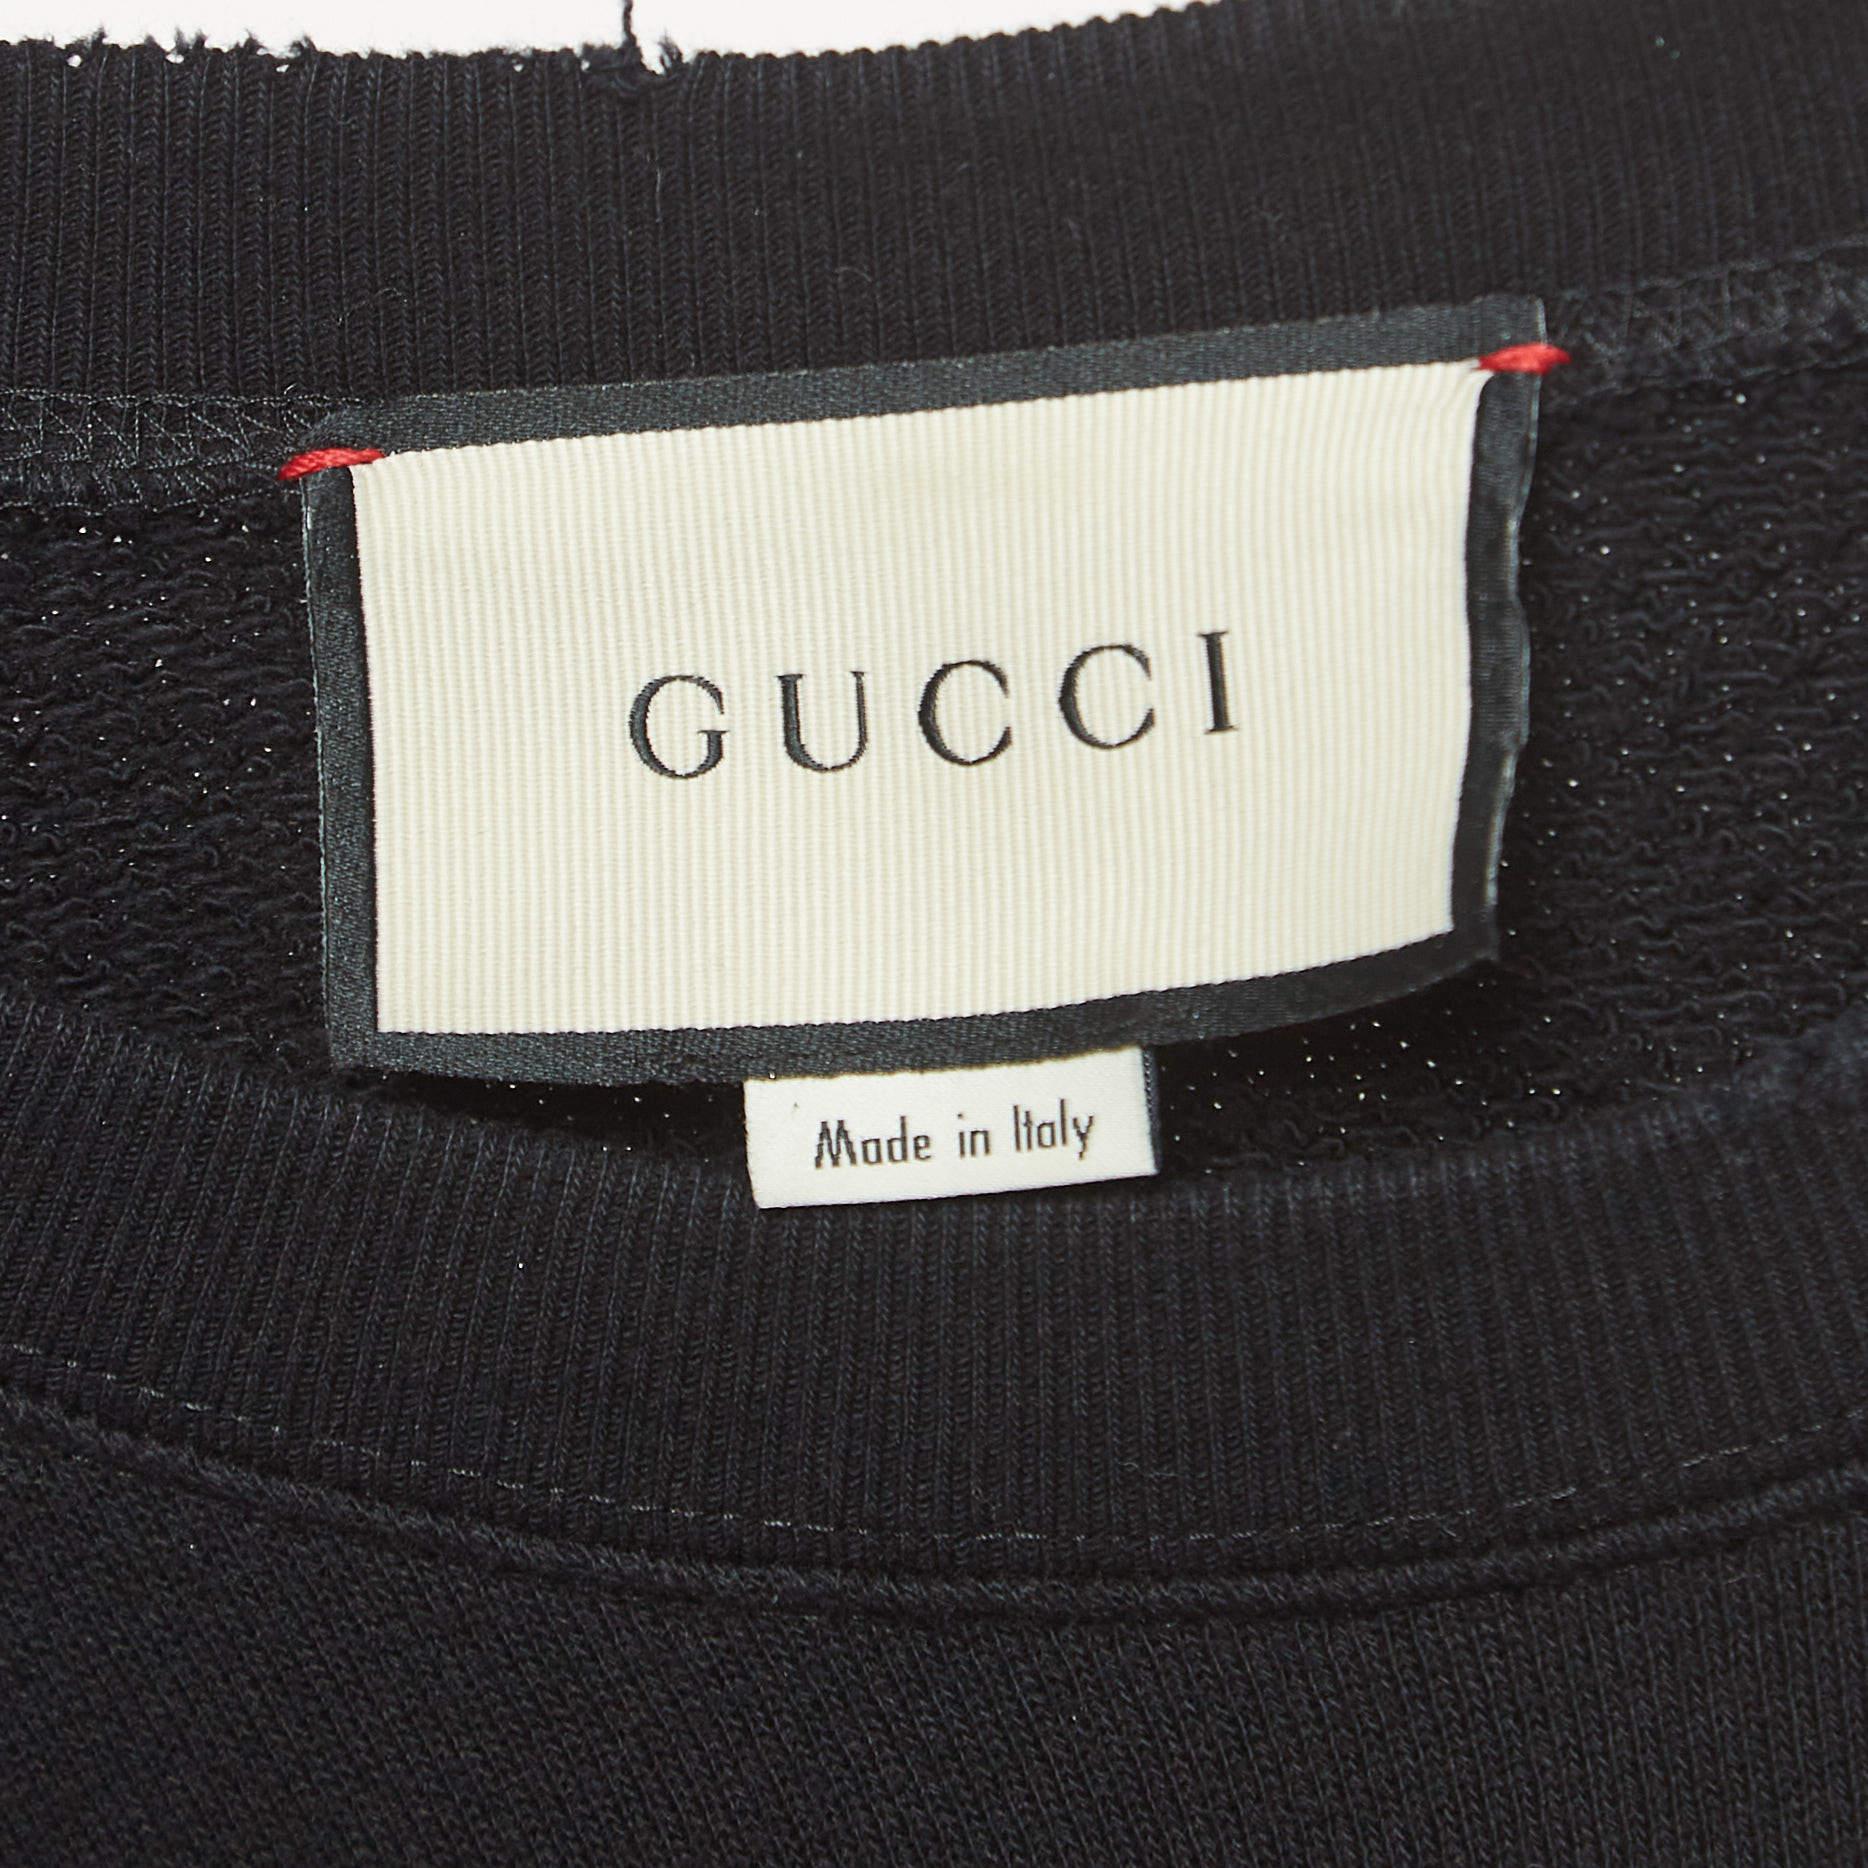 Gucci Black Logo Tiger Printed Cotton Knit Sweatshirt S In Good Condition For Sale In Dubai, Al Qouz 2